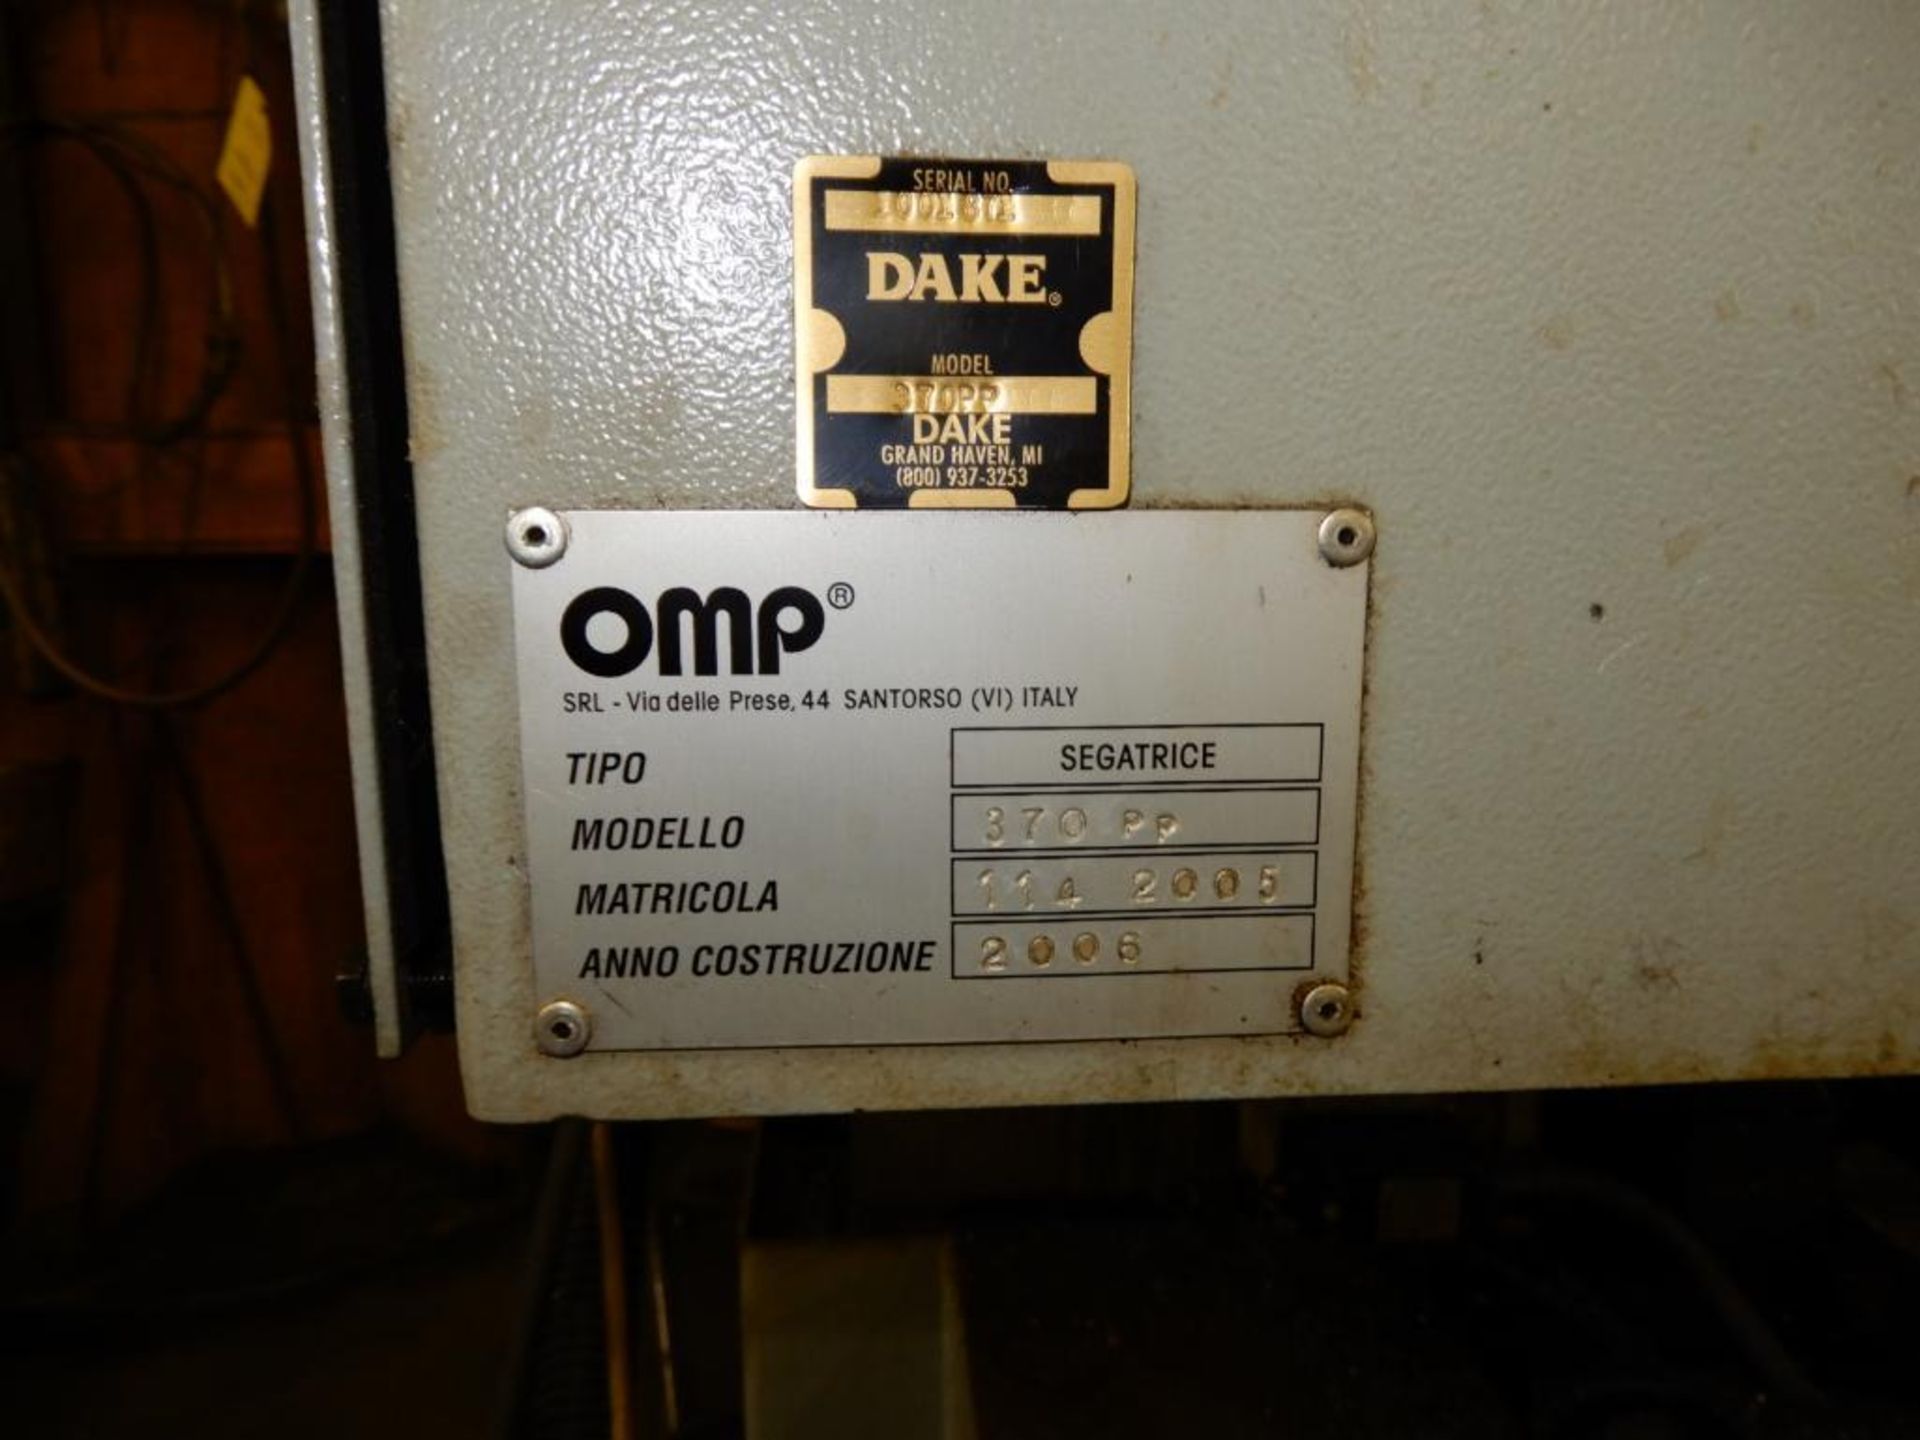 OMP/Dake Cold Saw Model 370 PP, S/N 114 2005 (2006) (by dock) - Image 4 of 4